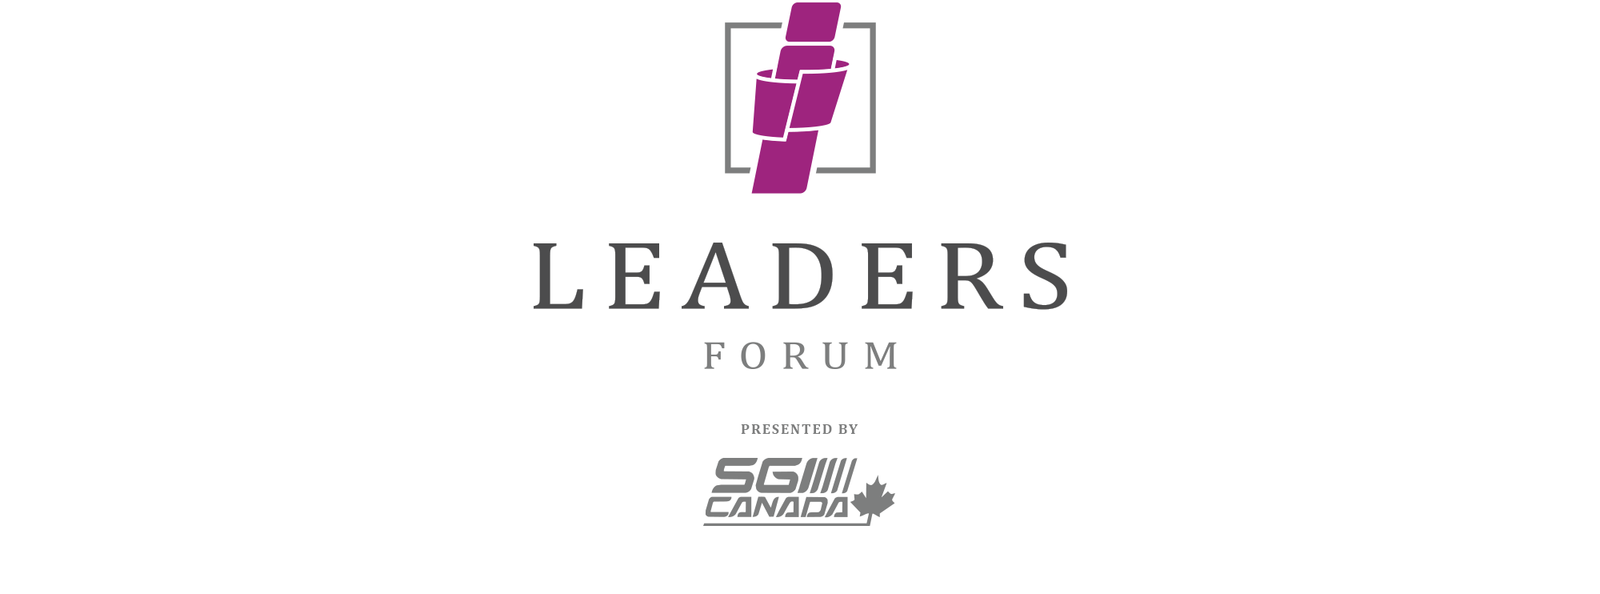 Leaders_Forum/2021LeadersForum_Web_v4.png